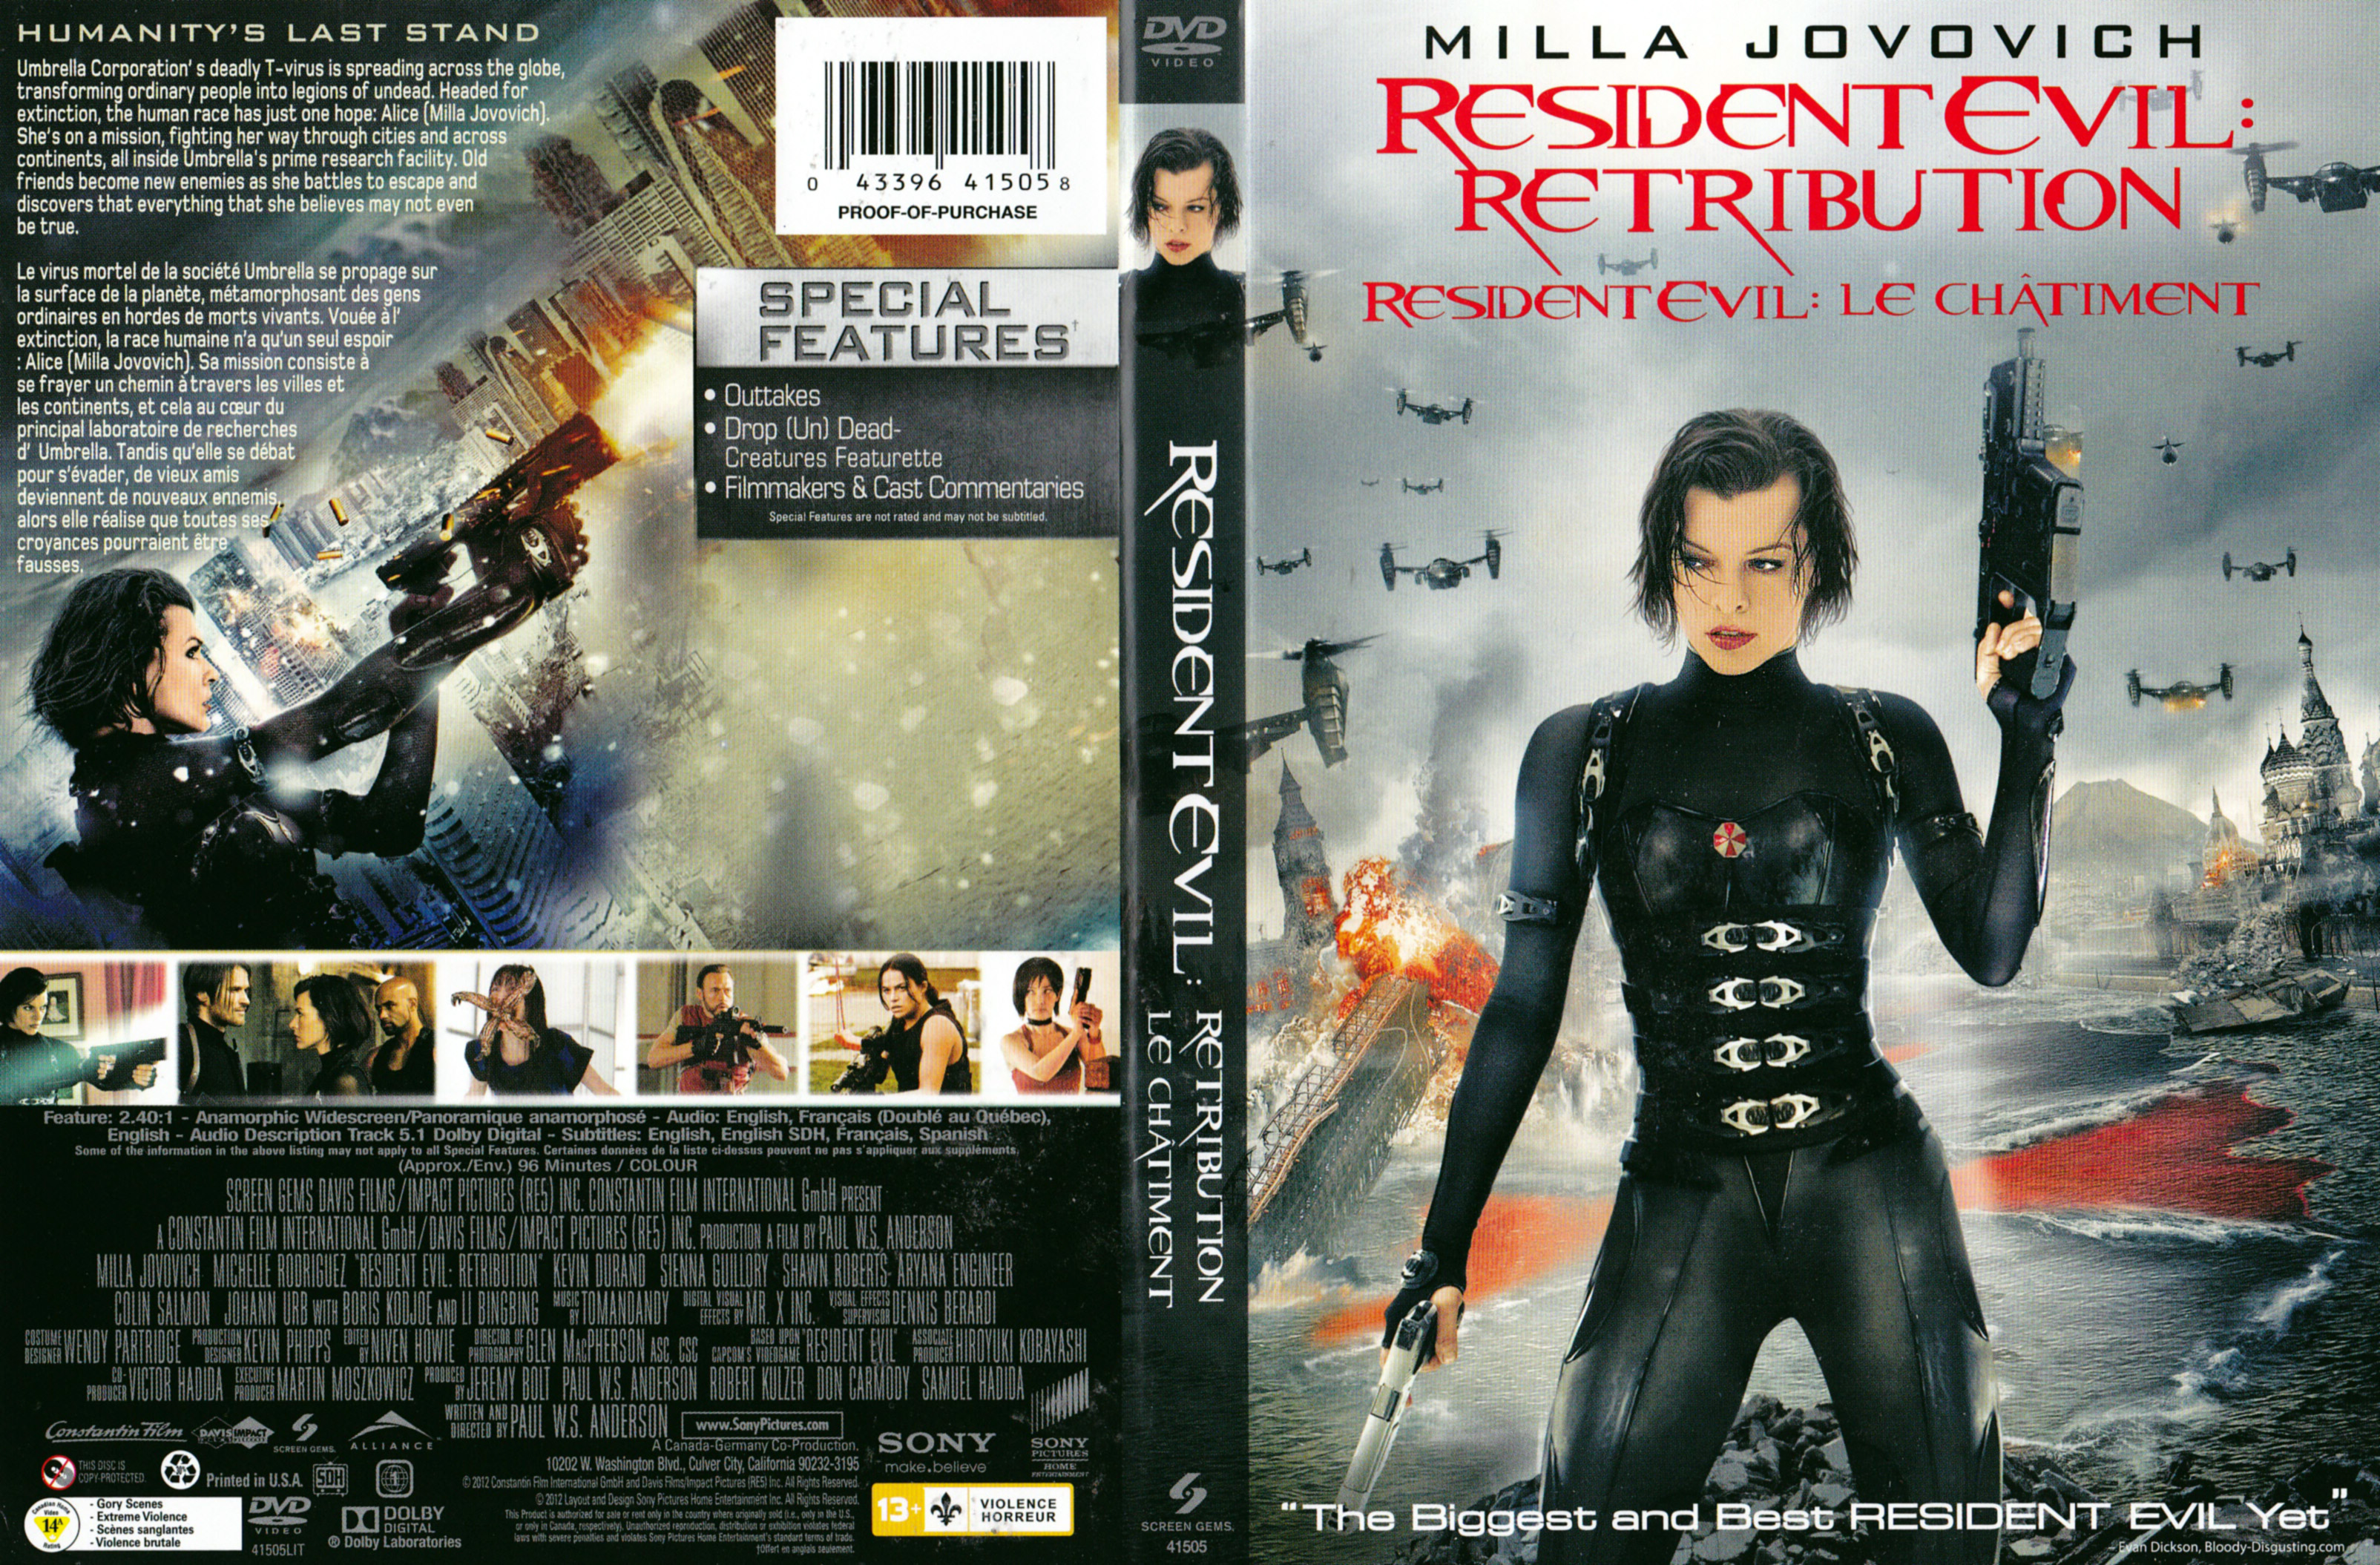 Jaquette DVD Resident Evil Retribution - Resident Evil Le chatiment (Canadienne)